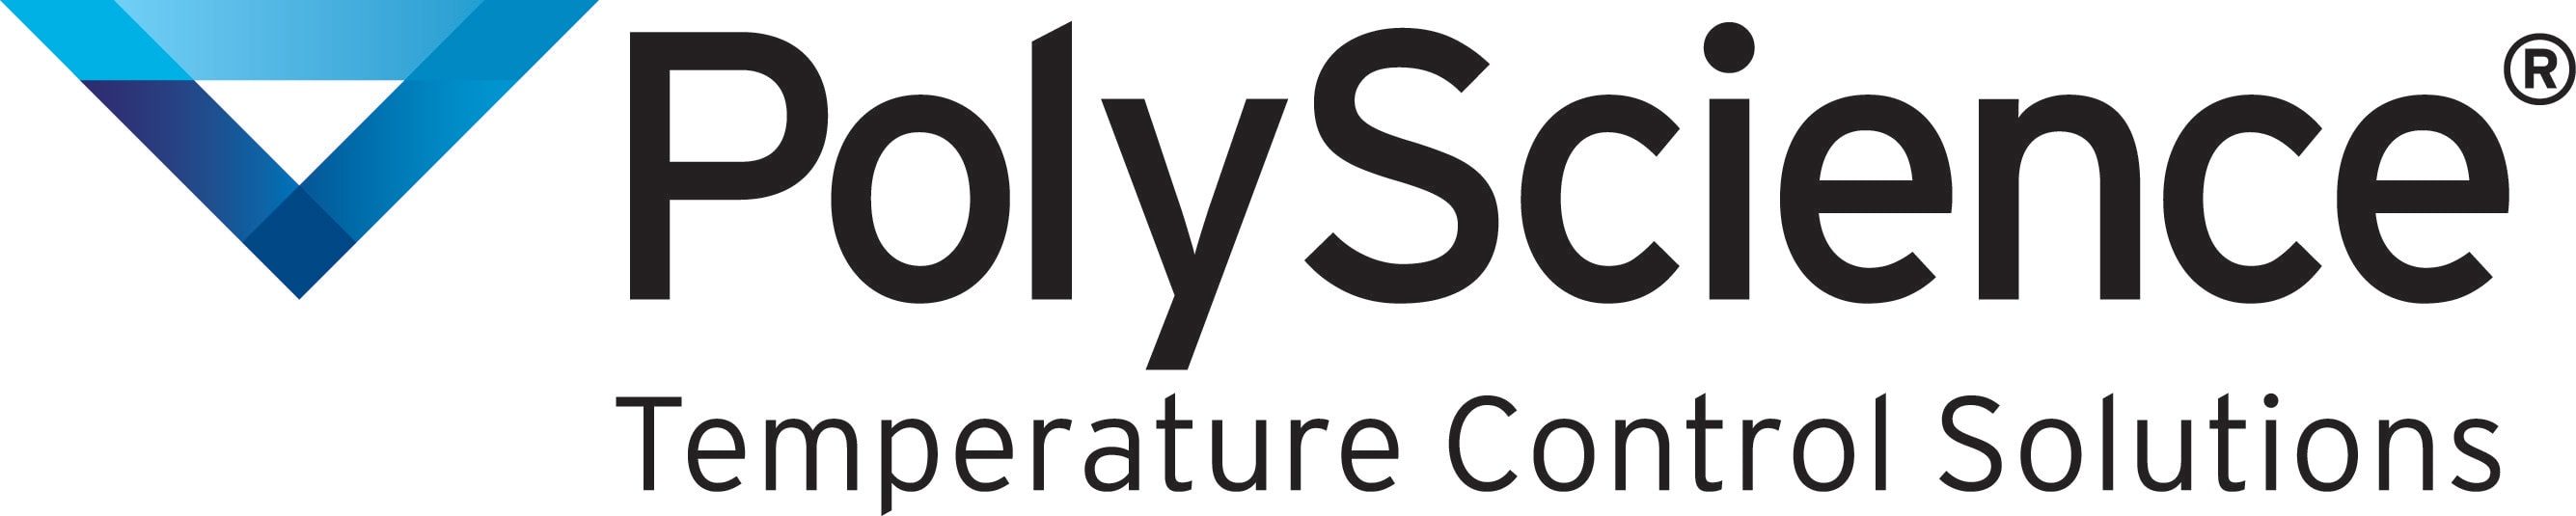 Polyscience_logo